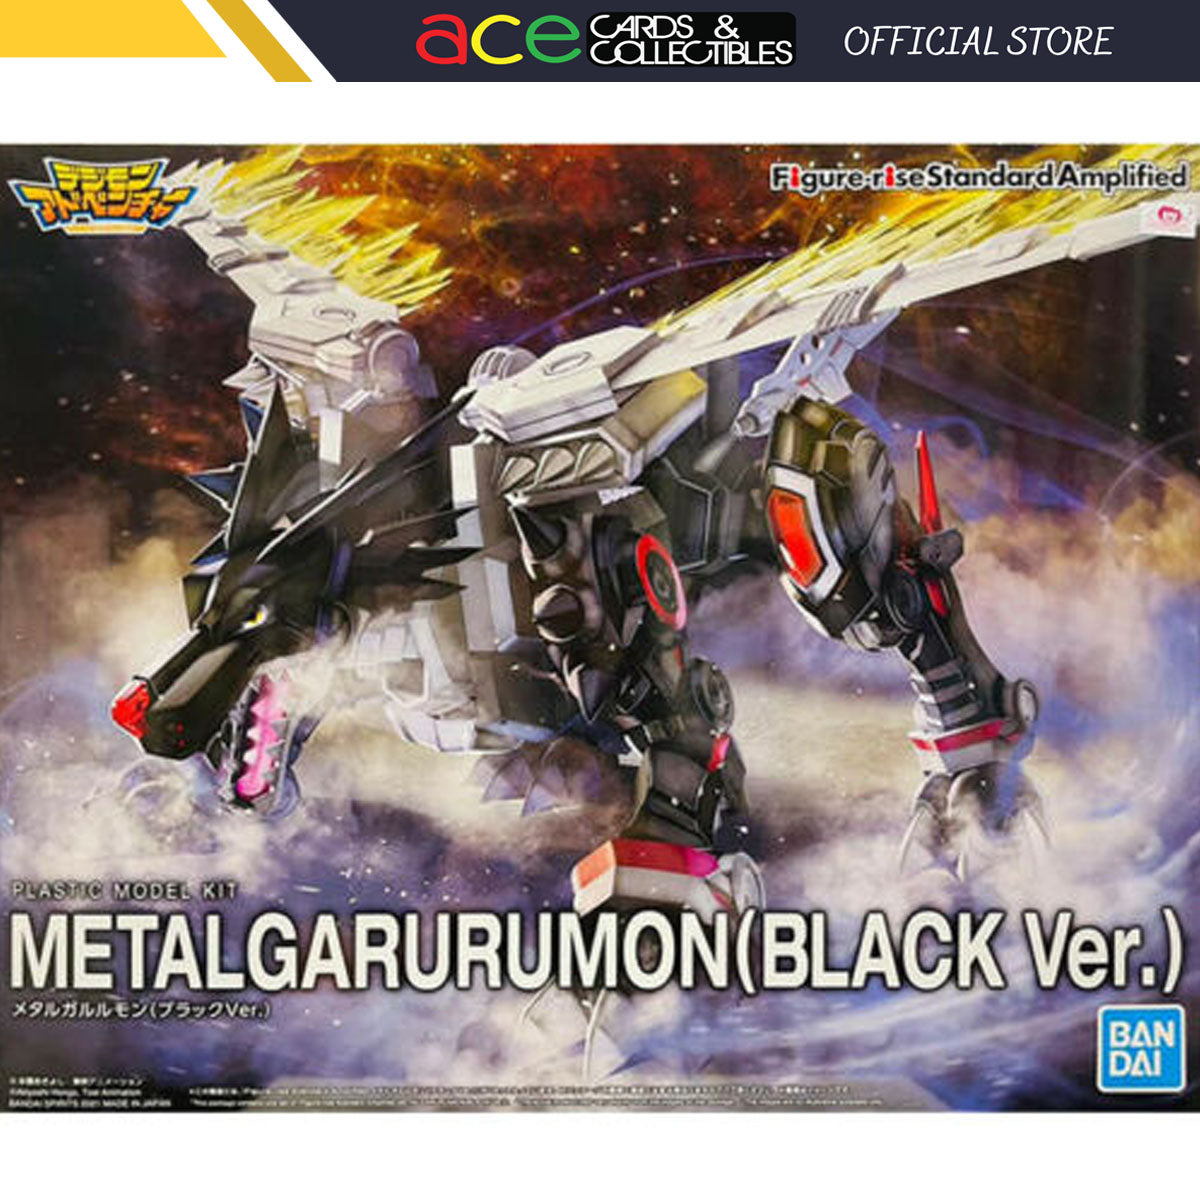 Digimon Figure-rise Standard Black Metal Garurumon (Amplified)-Bandai-Ace Cards & Collectibles